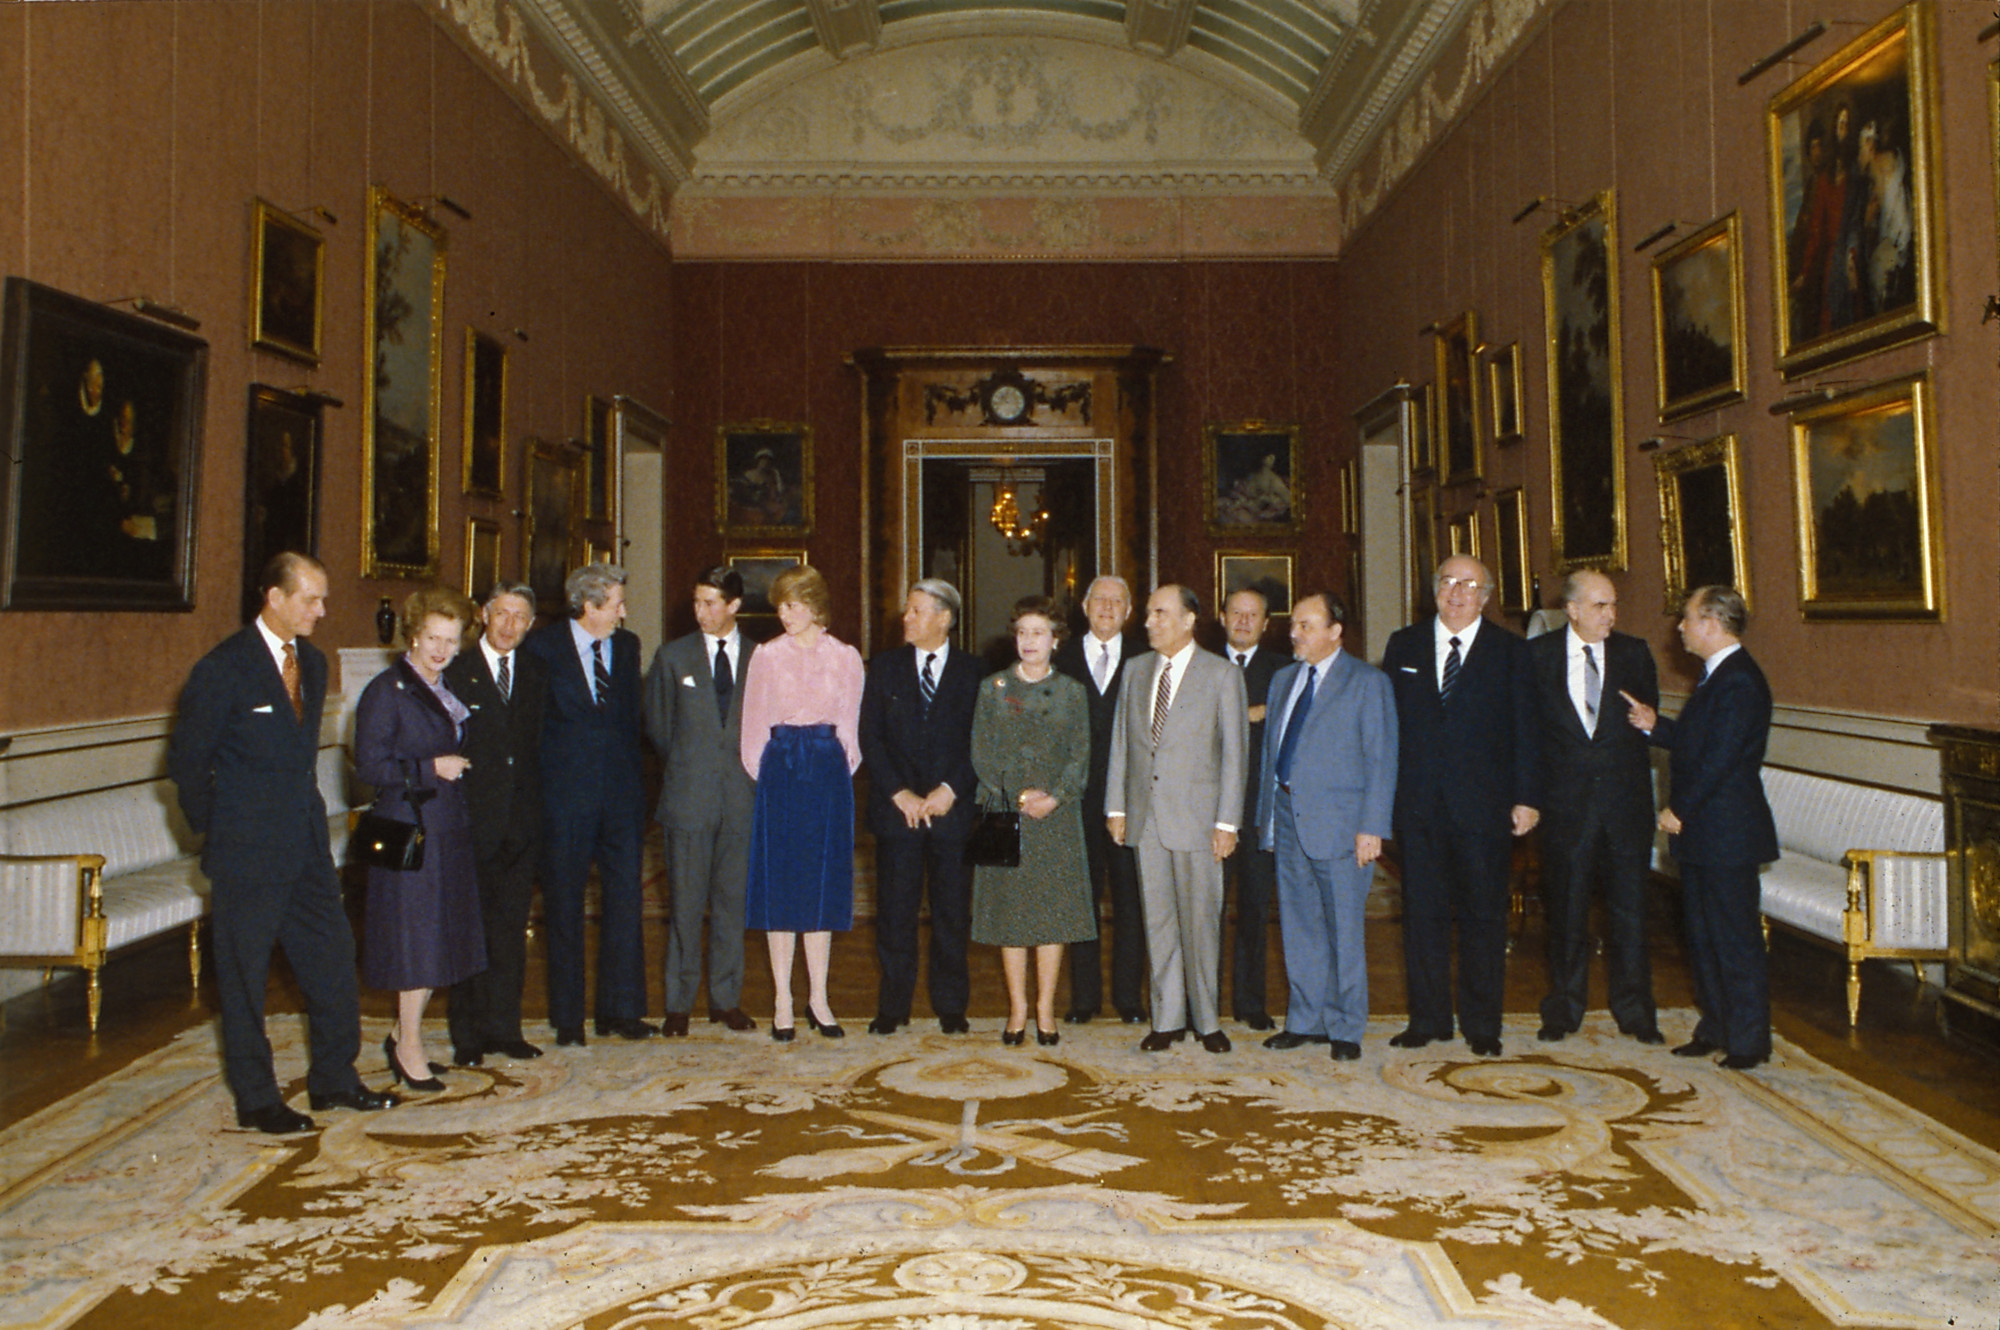 British royal family hosting the European Summit at Buckingham Palace in 1981